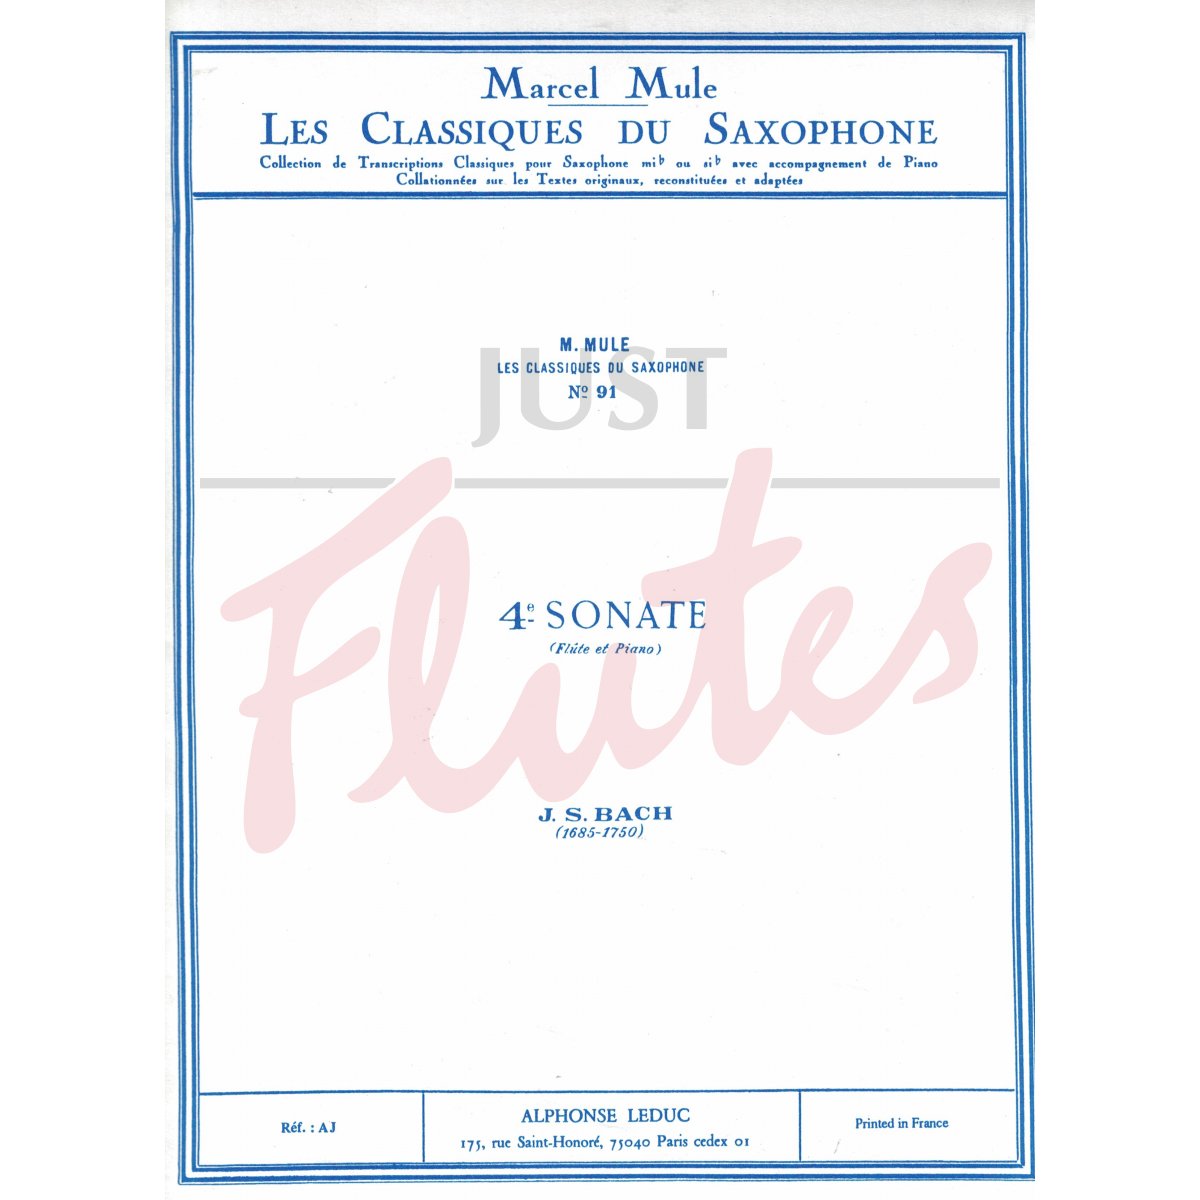 Sonata No. 4 arranged for Alto Saxophone and Piano